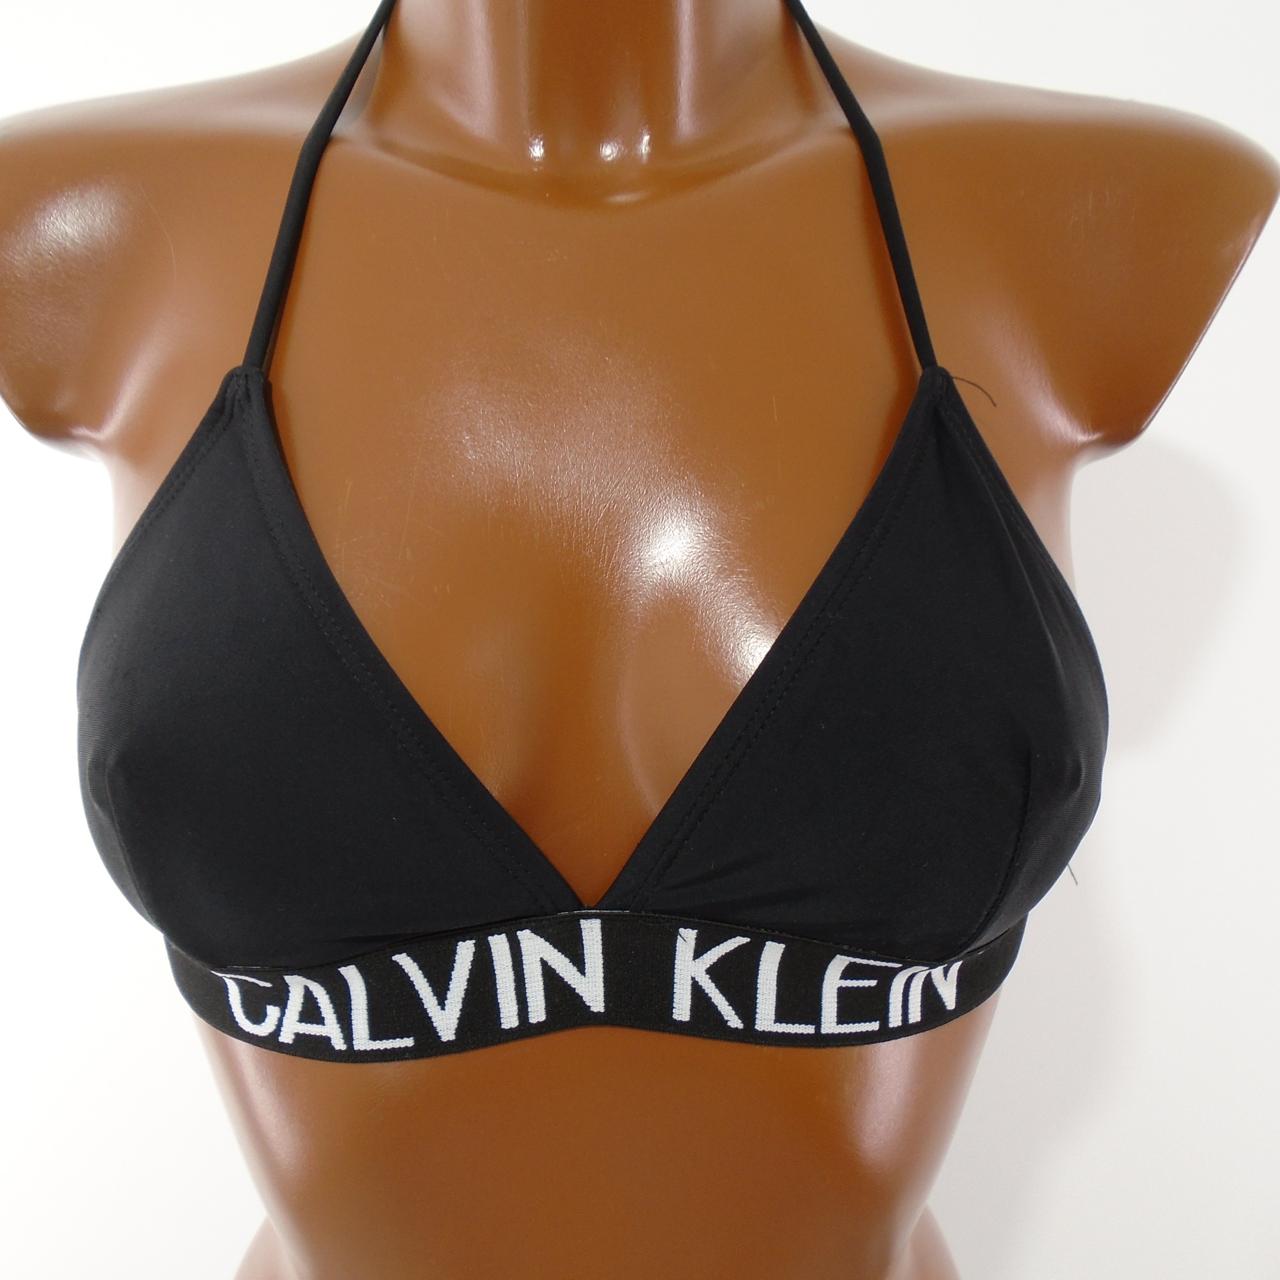 Women's Swimsuit Calvin Klein. Black. S. Used. Good